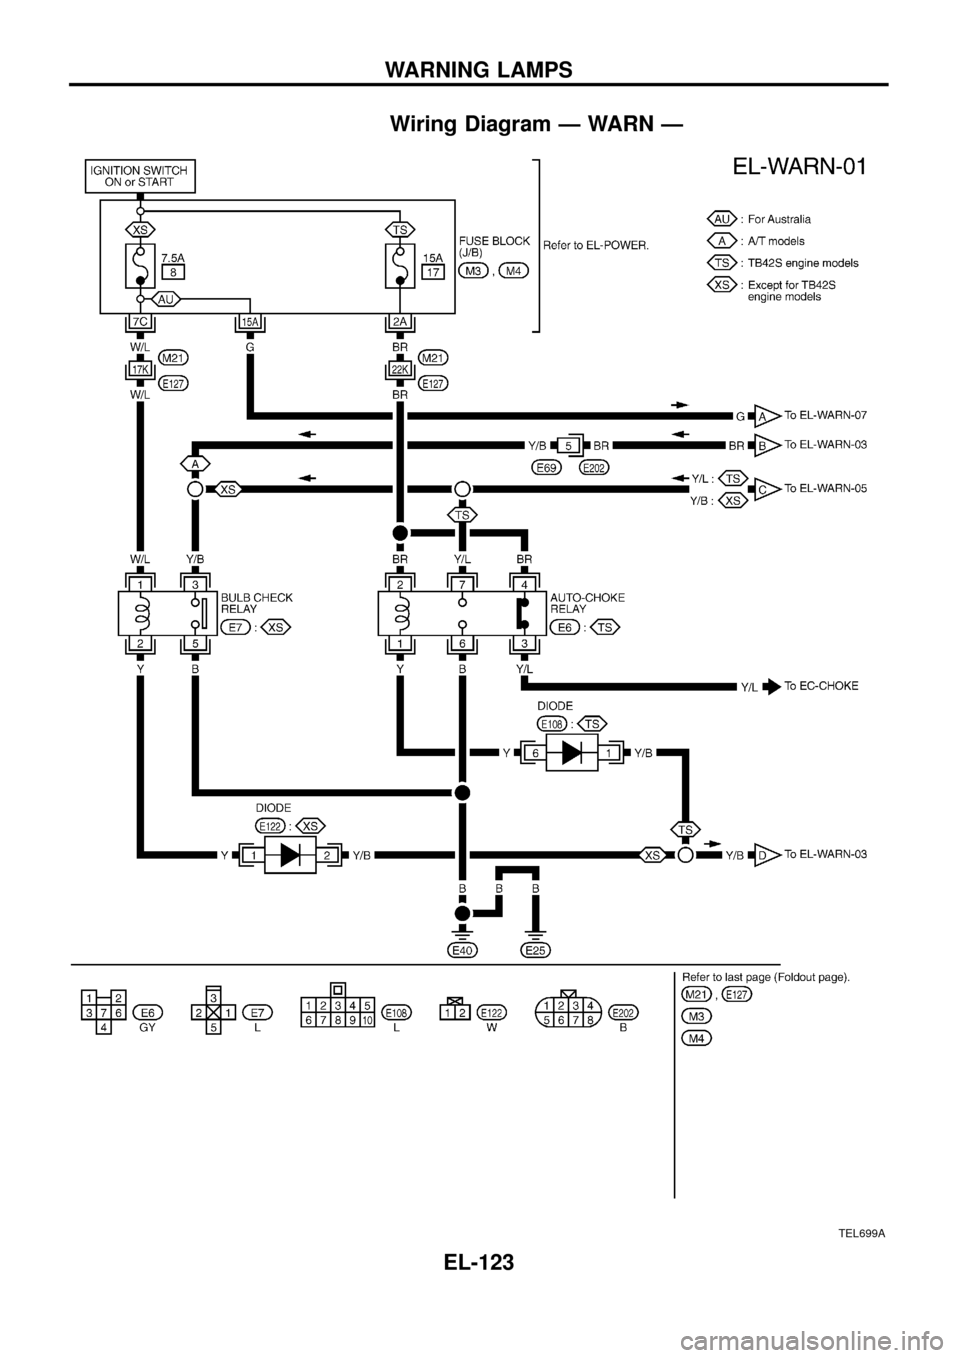 NISSAN PATROL 1998 Y61 / 5.G Electrical System Service Manual Wiring Diagram Ð WARN Ð
TEL699A
WARNING LAMPS
EL-123 